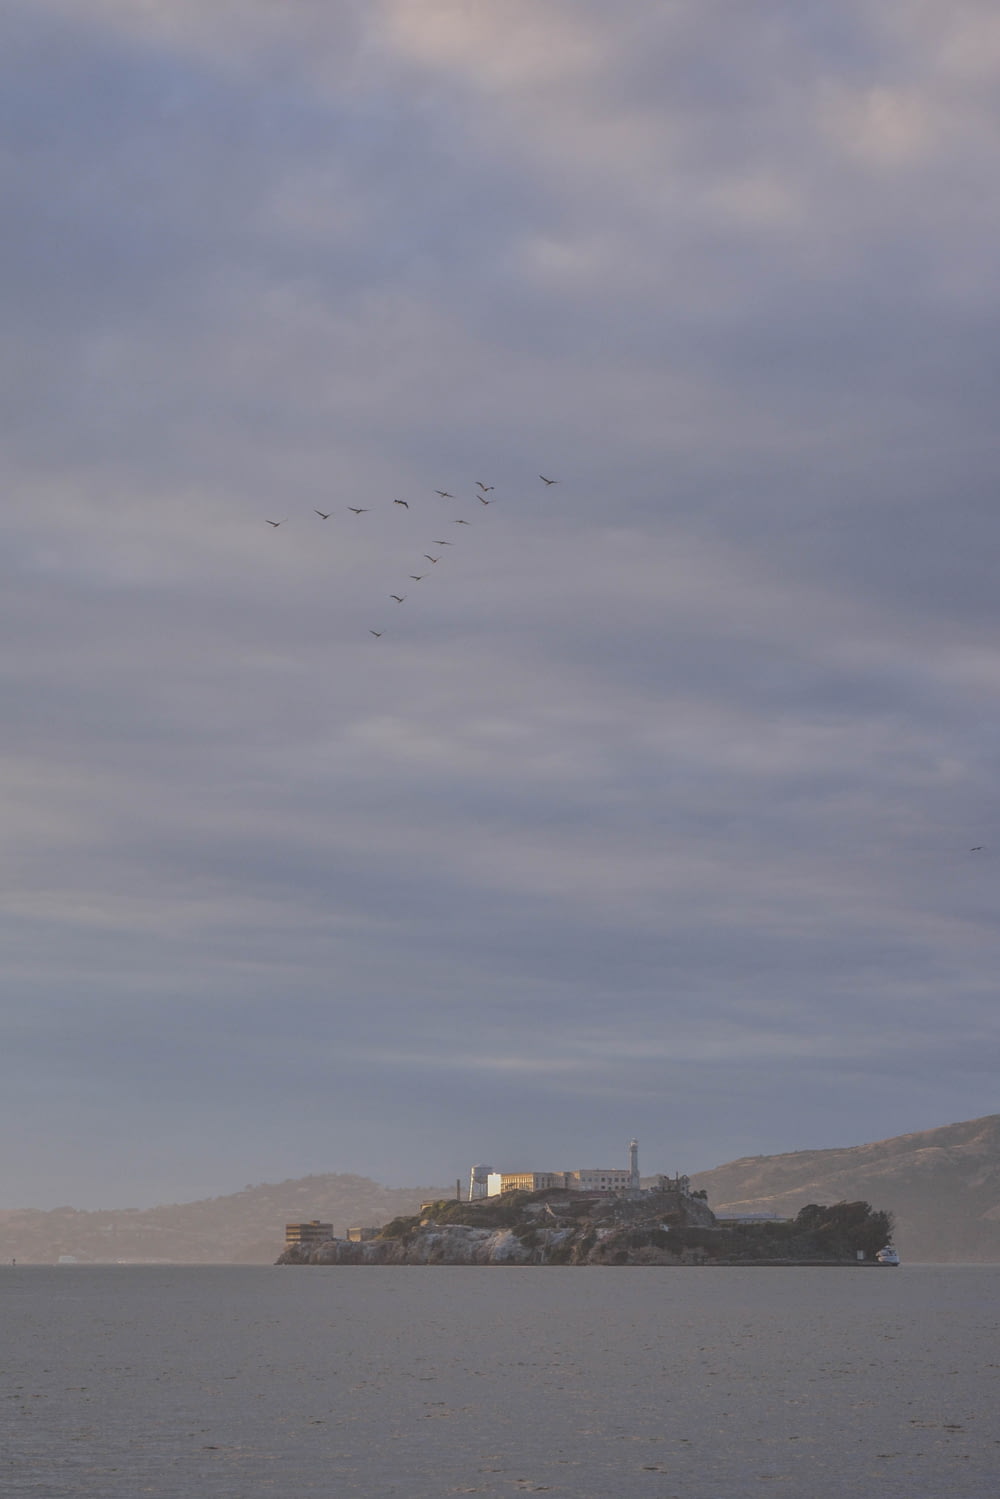 birds flying on v formation over Alcatraz